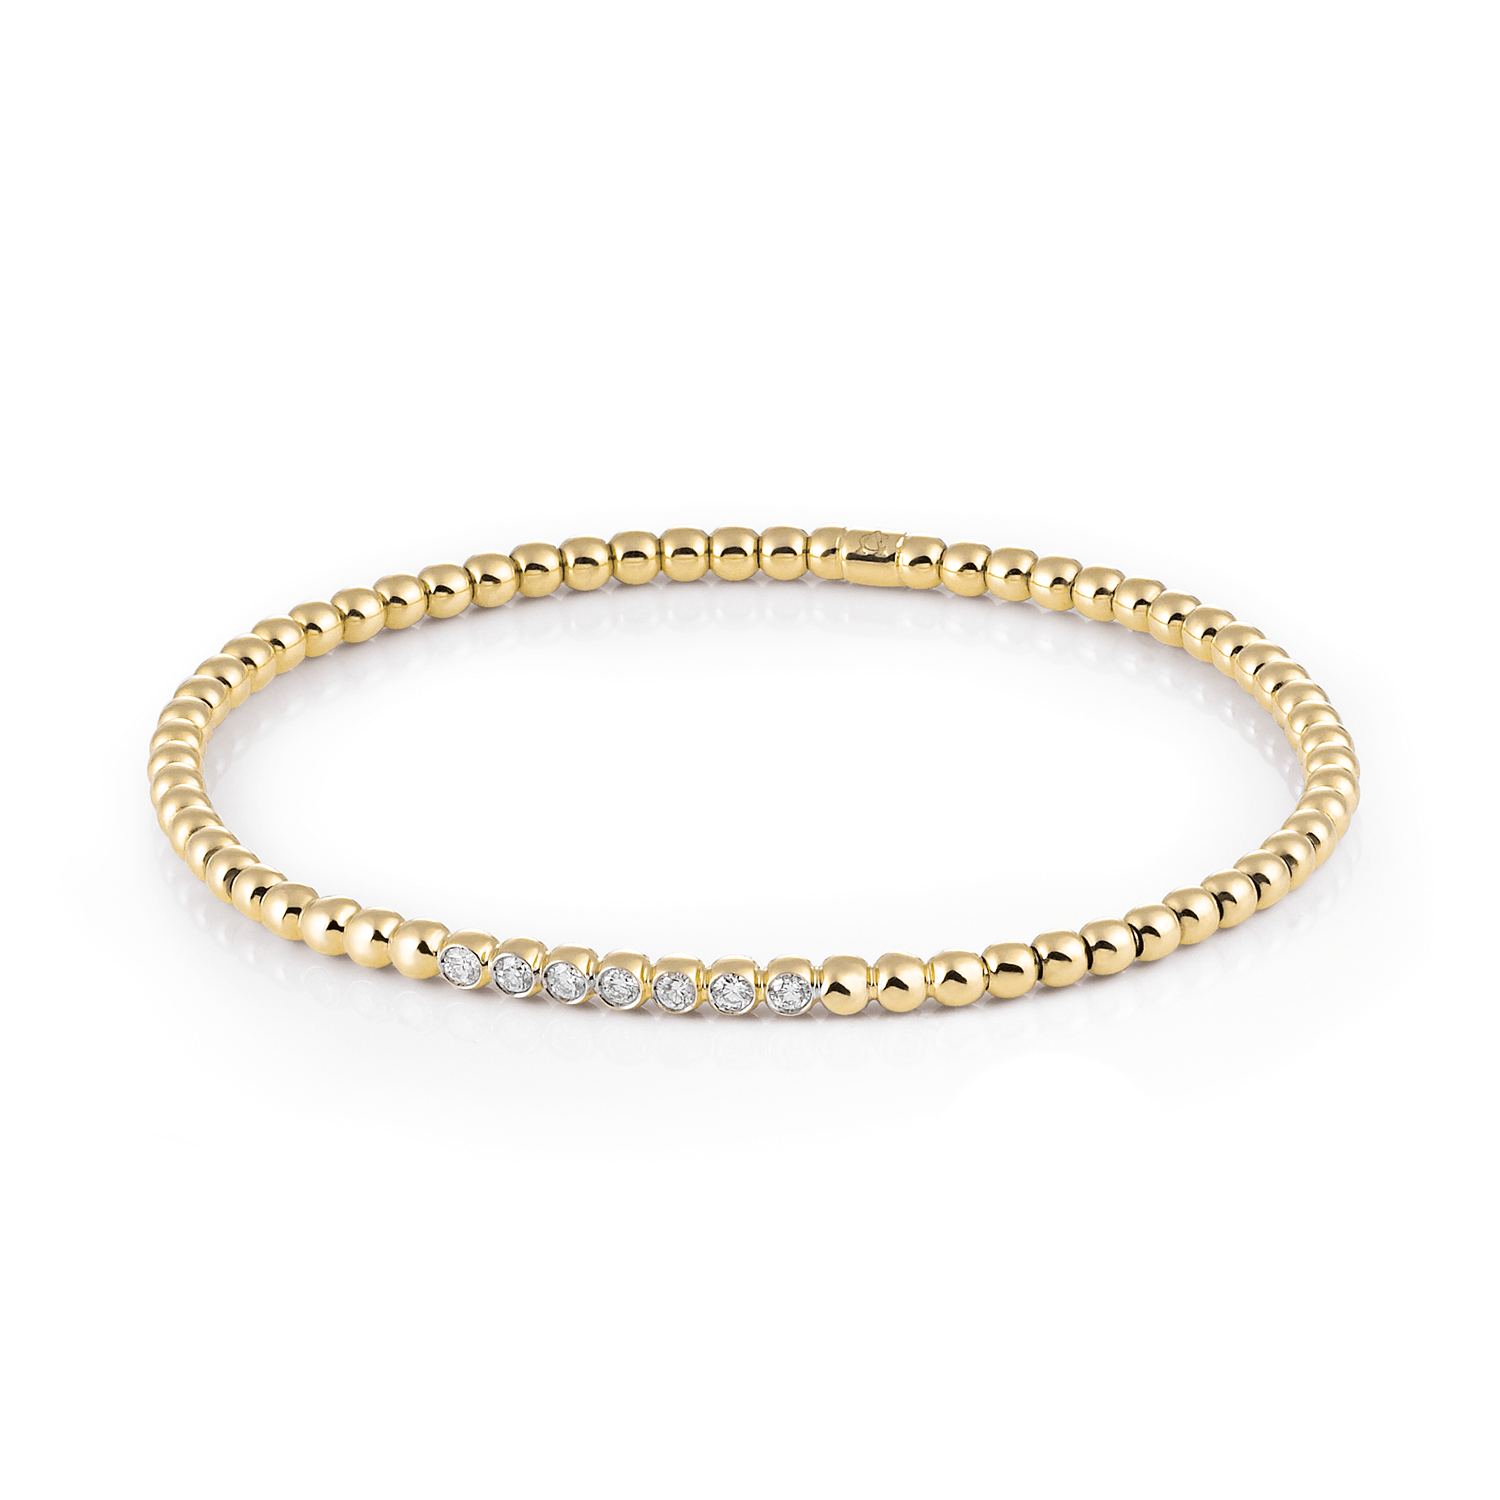 Al Coro Stretchy Bracelet in 18k Yellow Gold with 7 Diamonds - Orsini Jewellers NZ